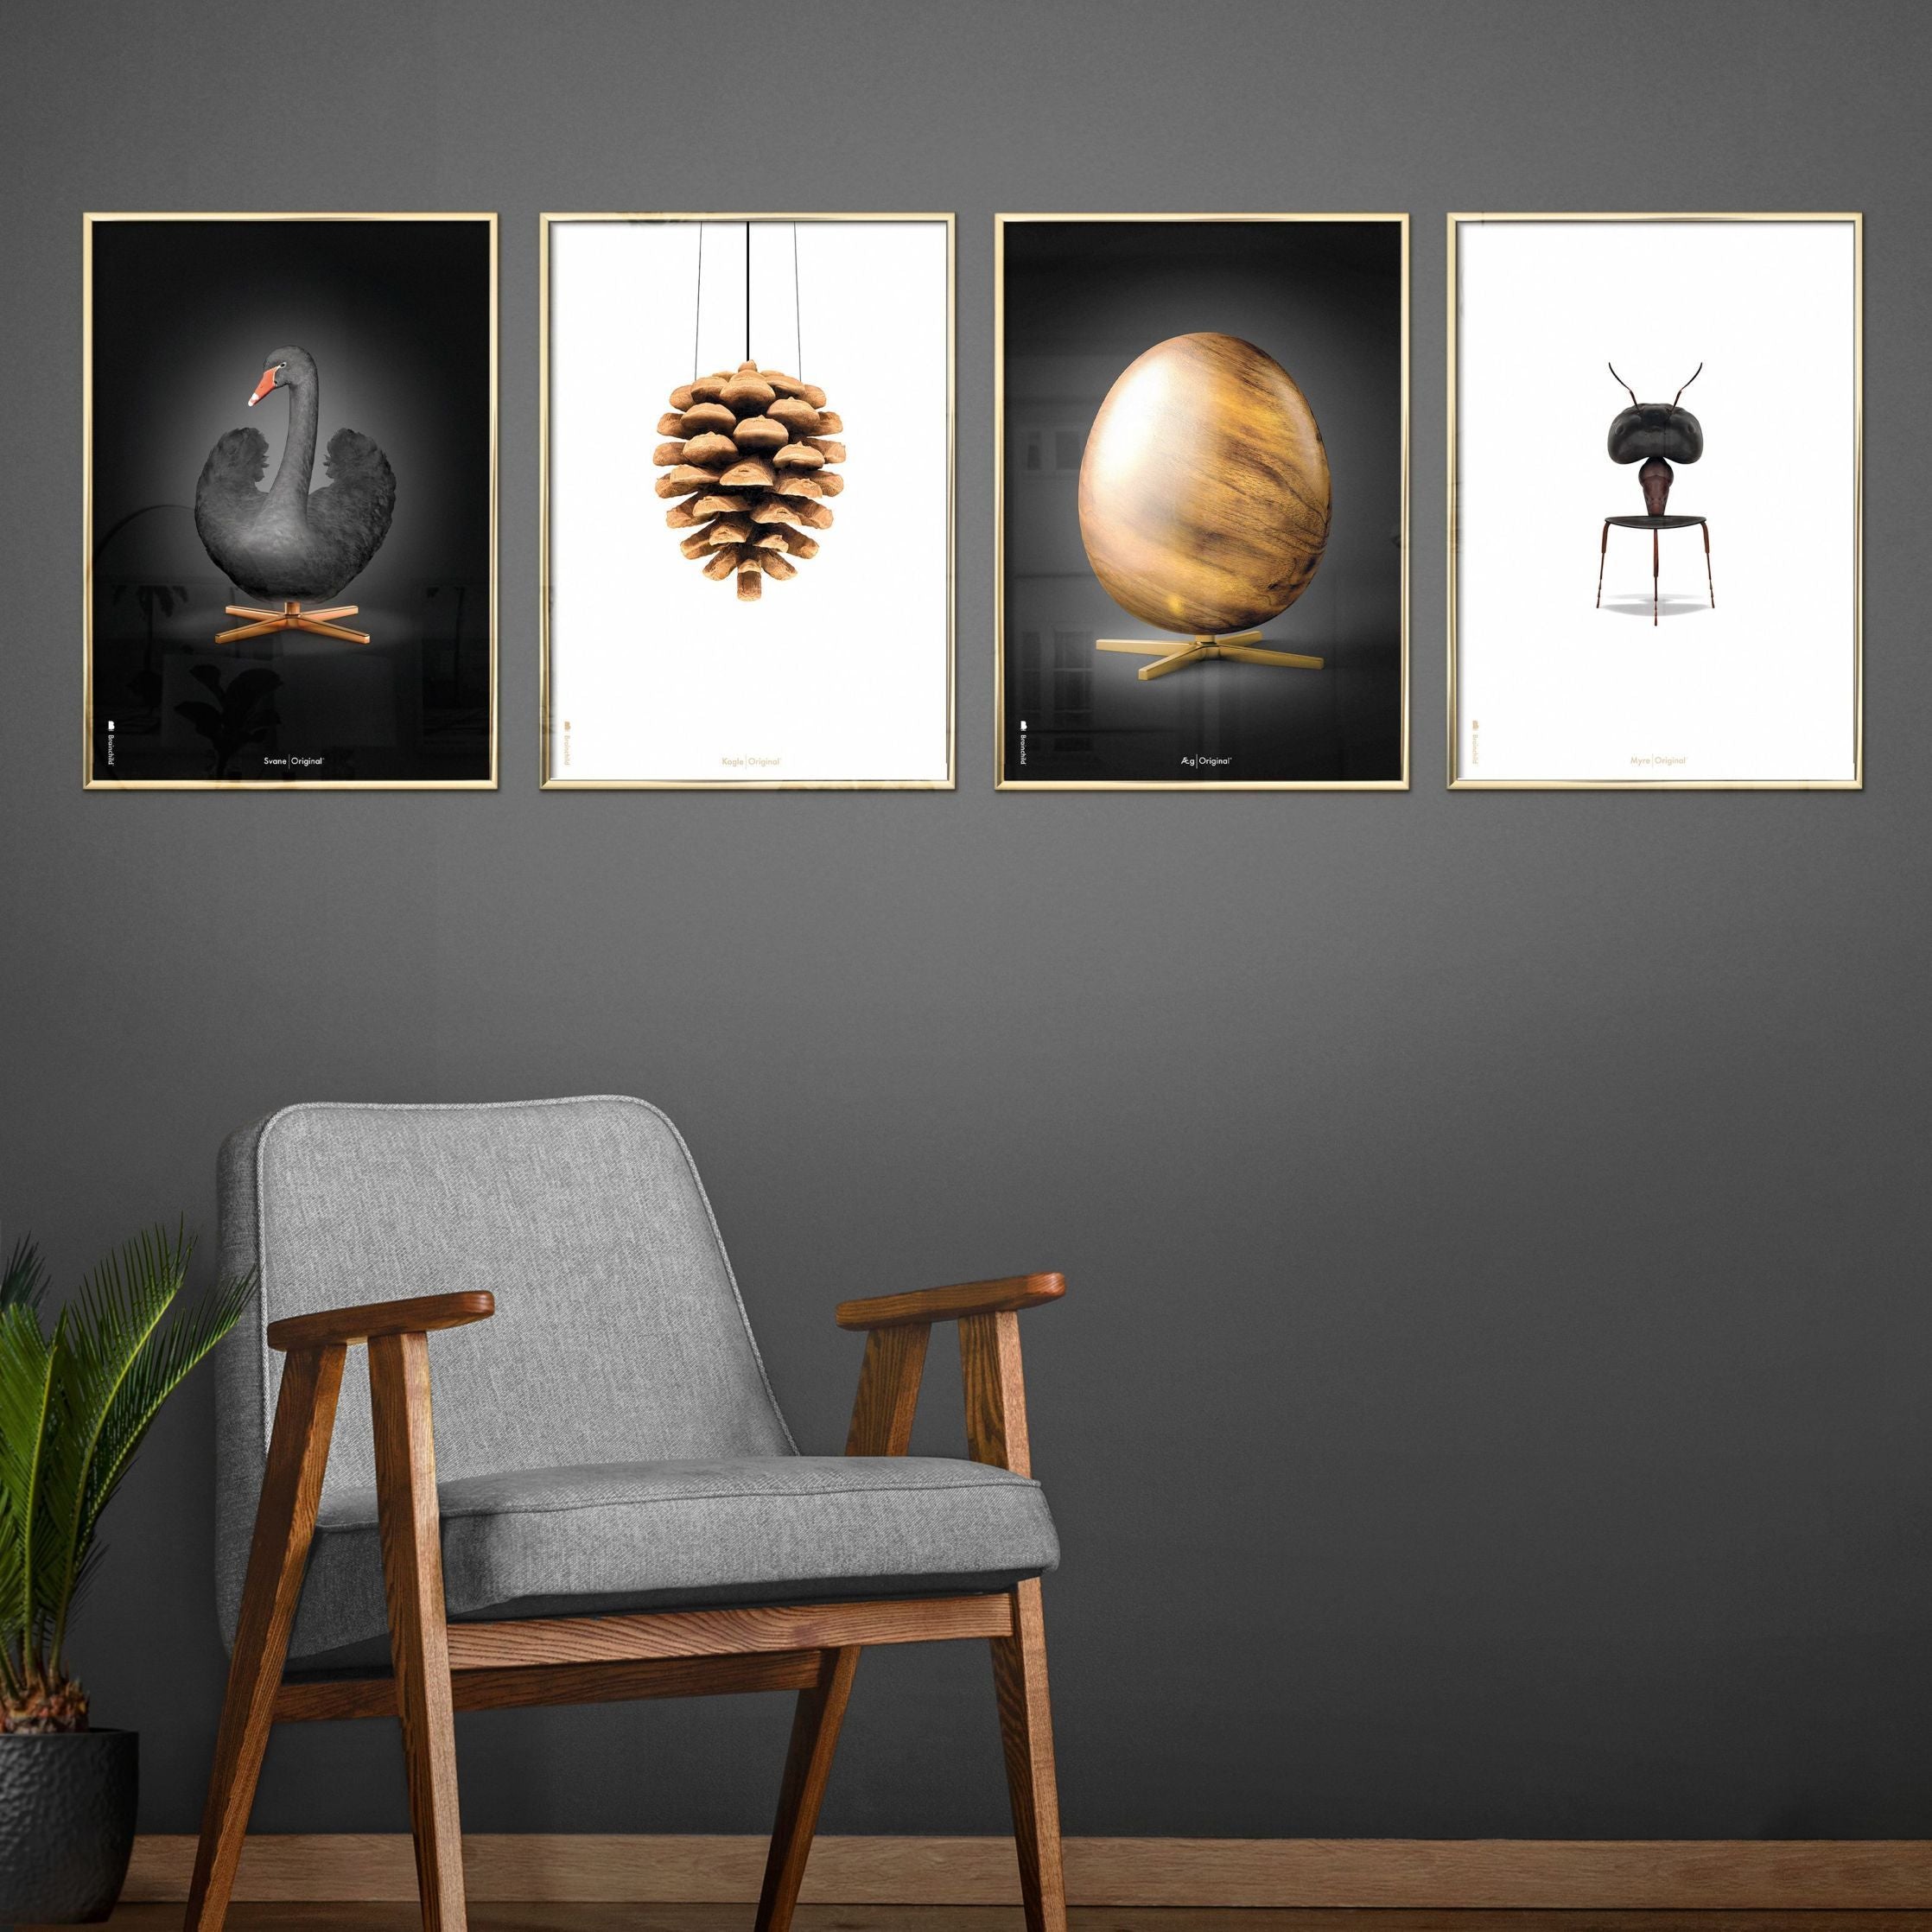 Brainchild Ant Classic Poster, Frame Made Of Light Wood 50x70 Cm, White Background